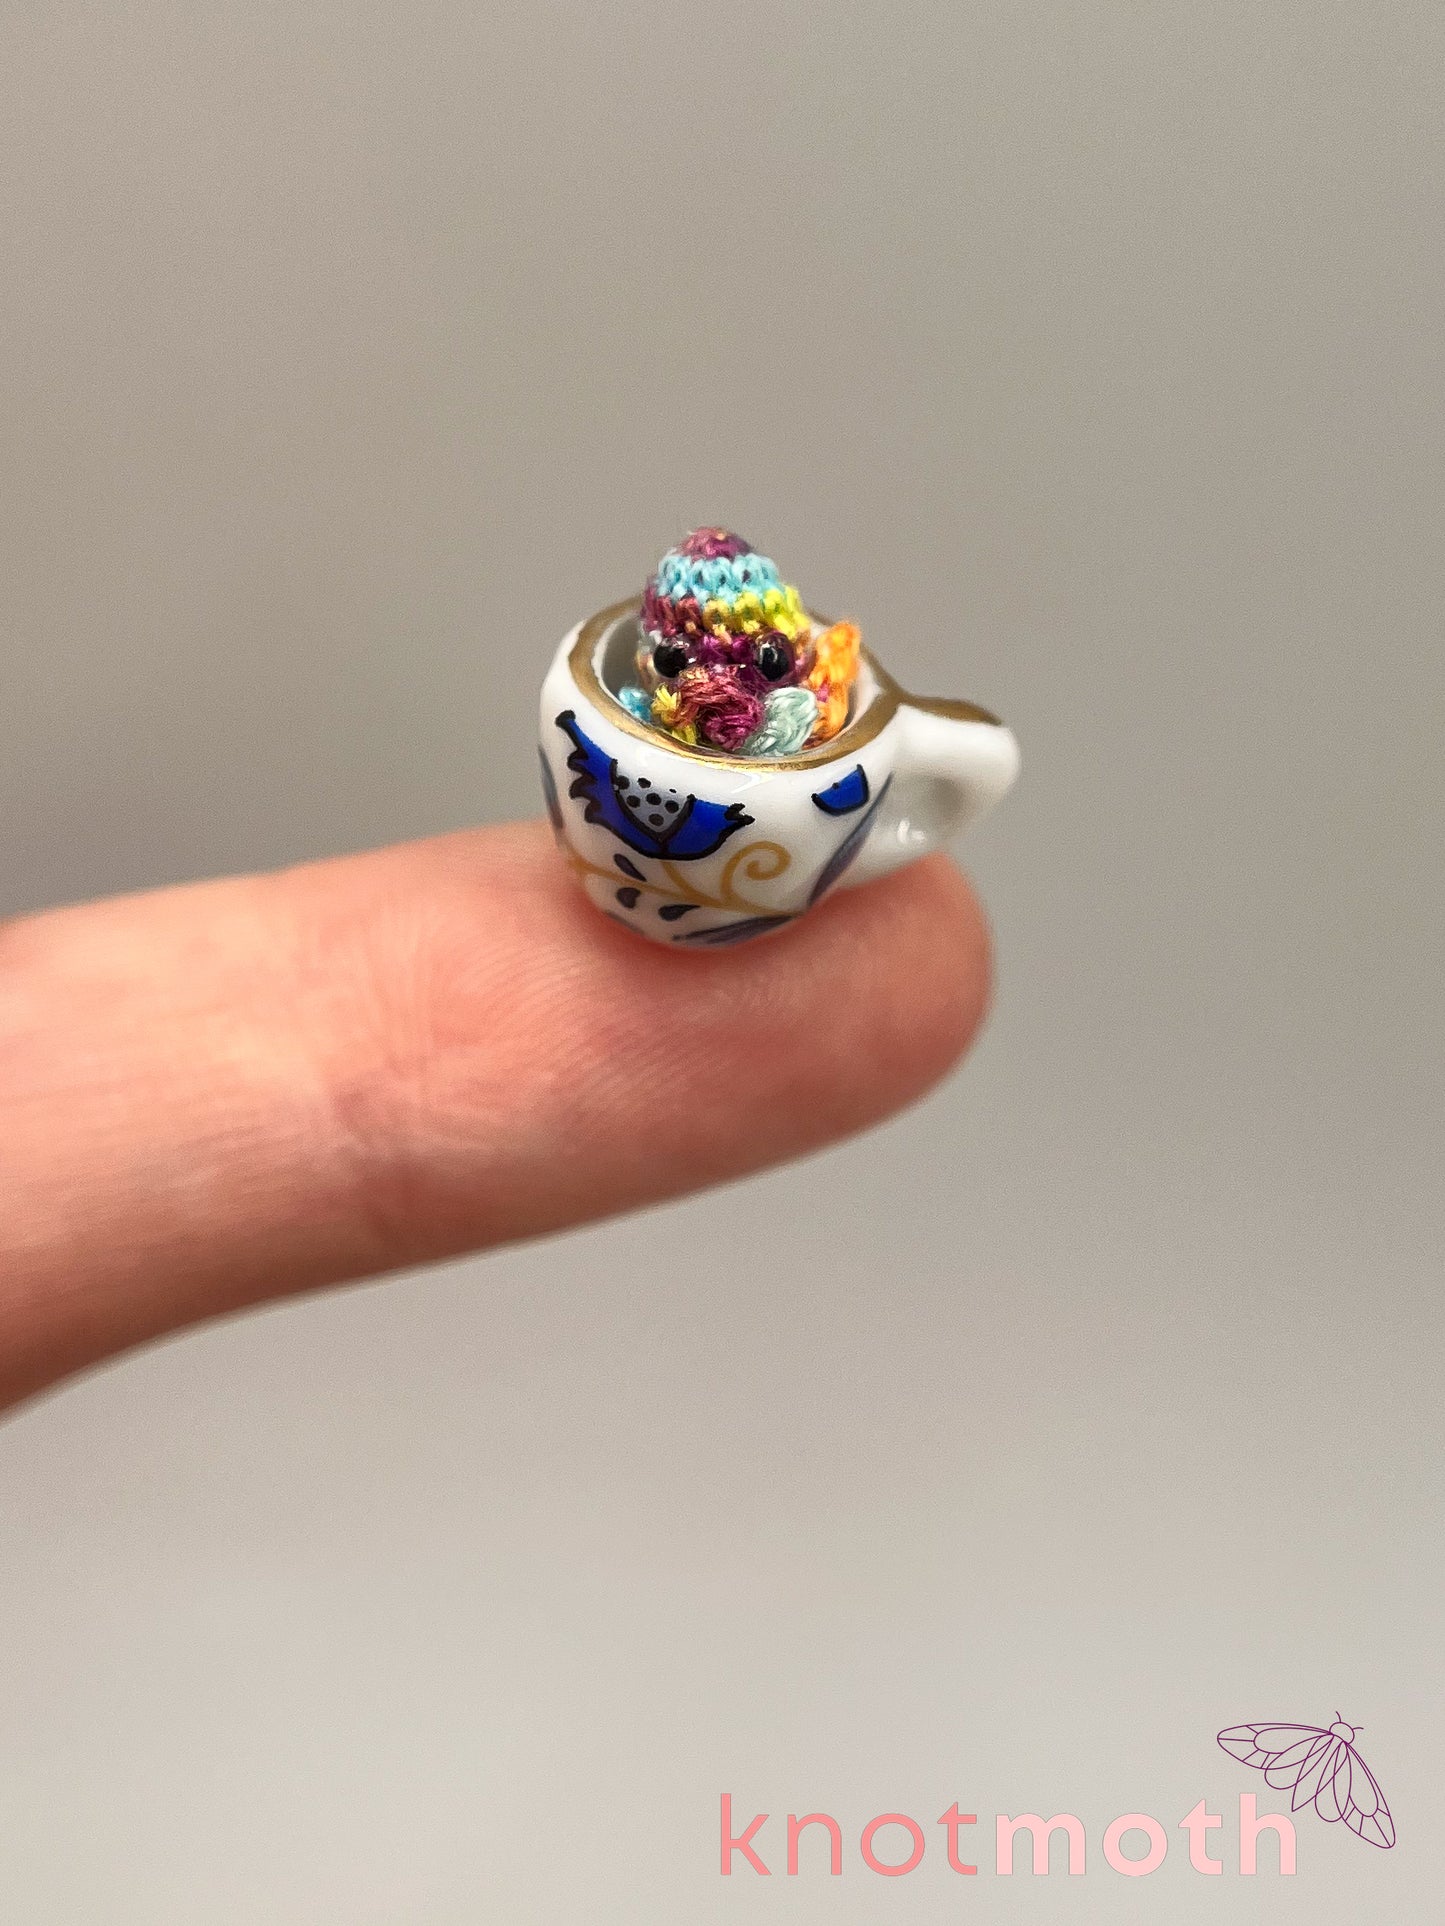 mystery teacup/mug ⋆.˚